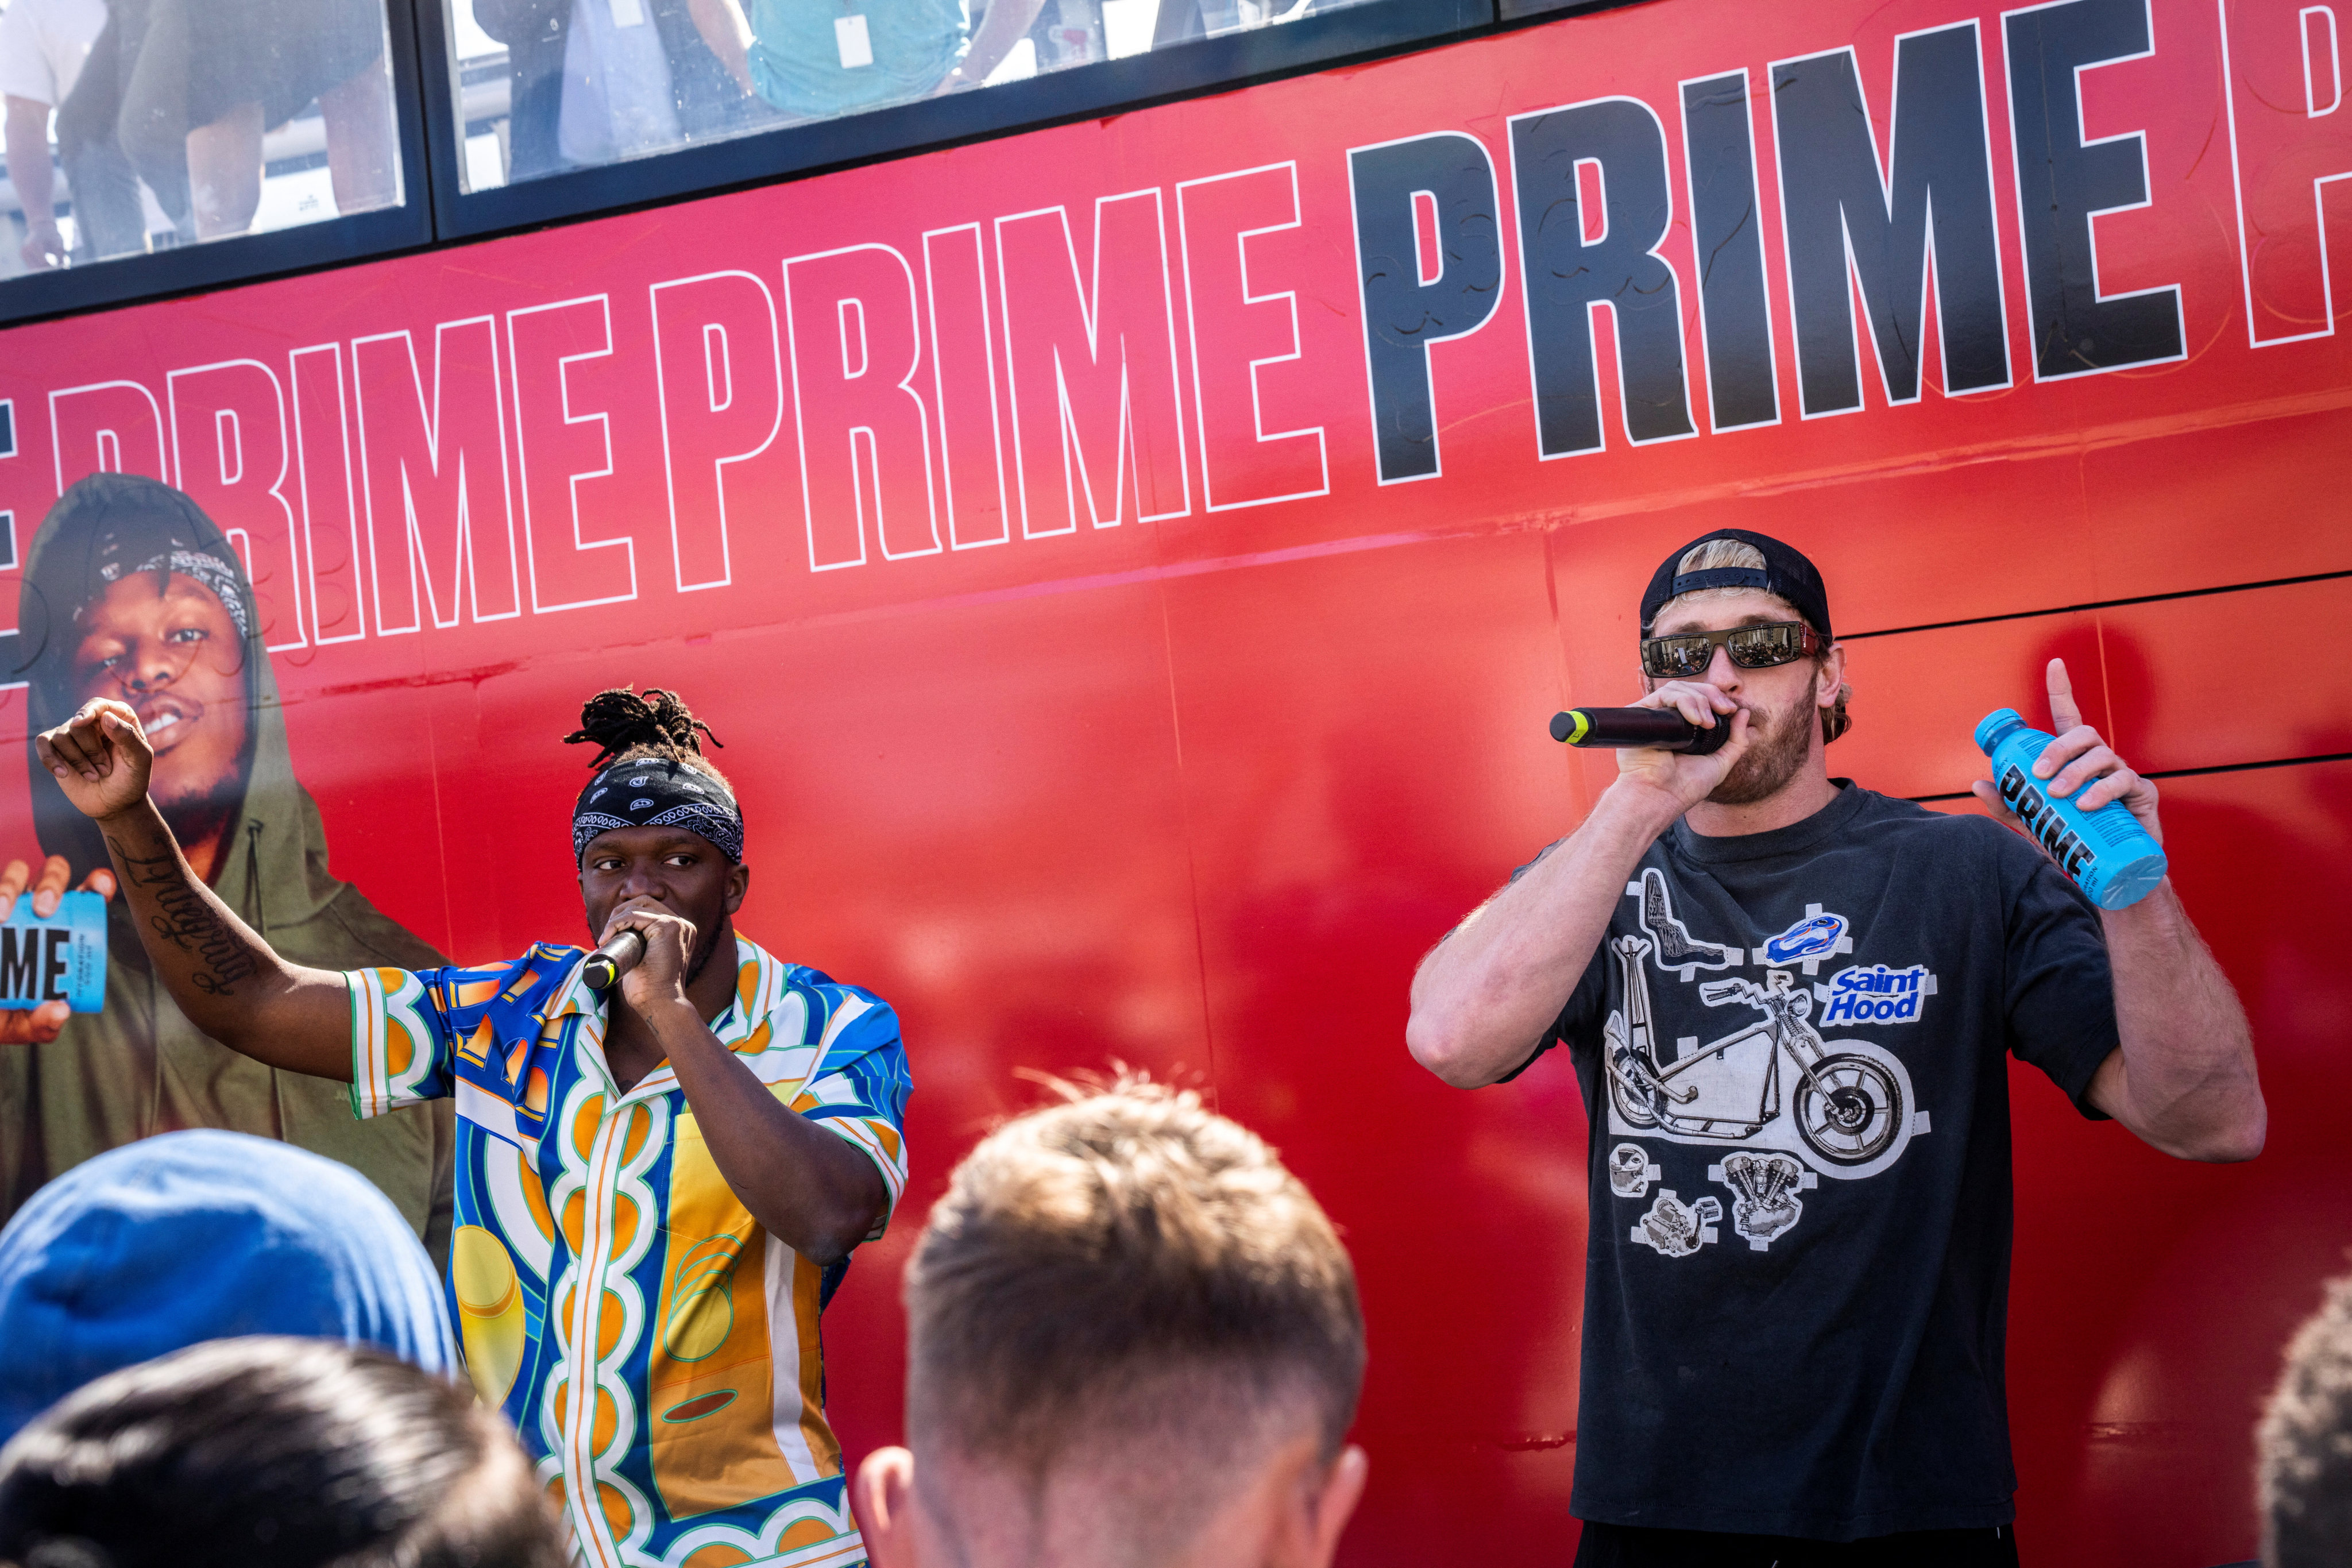 Youtube personalities Logan Paul and British rapper KSI, left, meet fans during a Prime soft drink promotional event in Copenhagen, Denmark on June 27. Photo: Ritzau Scanpix / Ida Marie Odgaard via Reuters